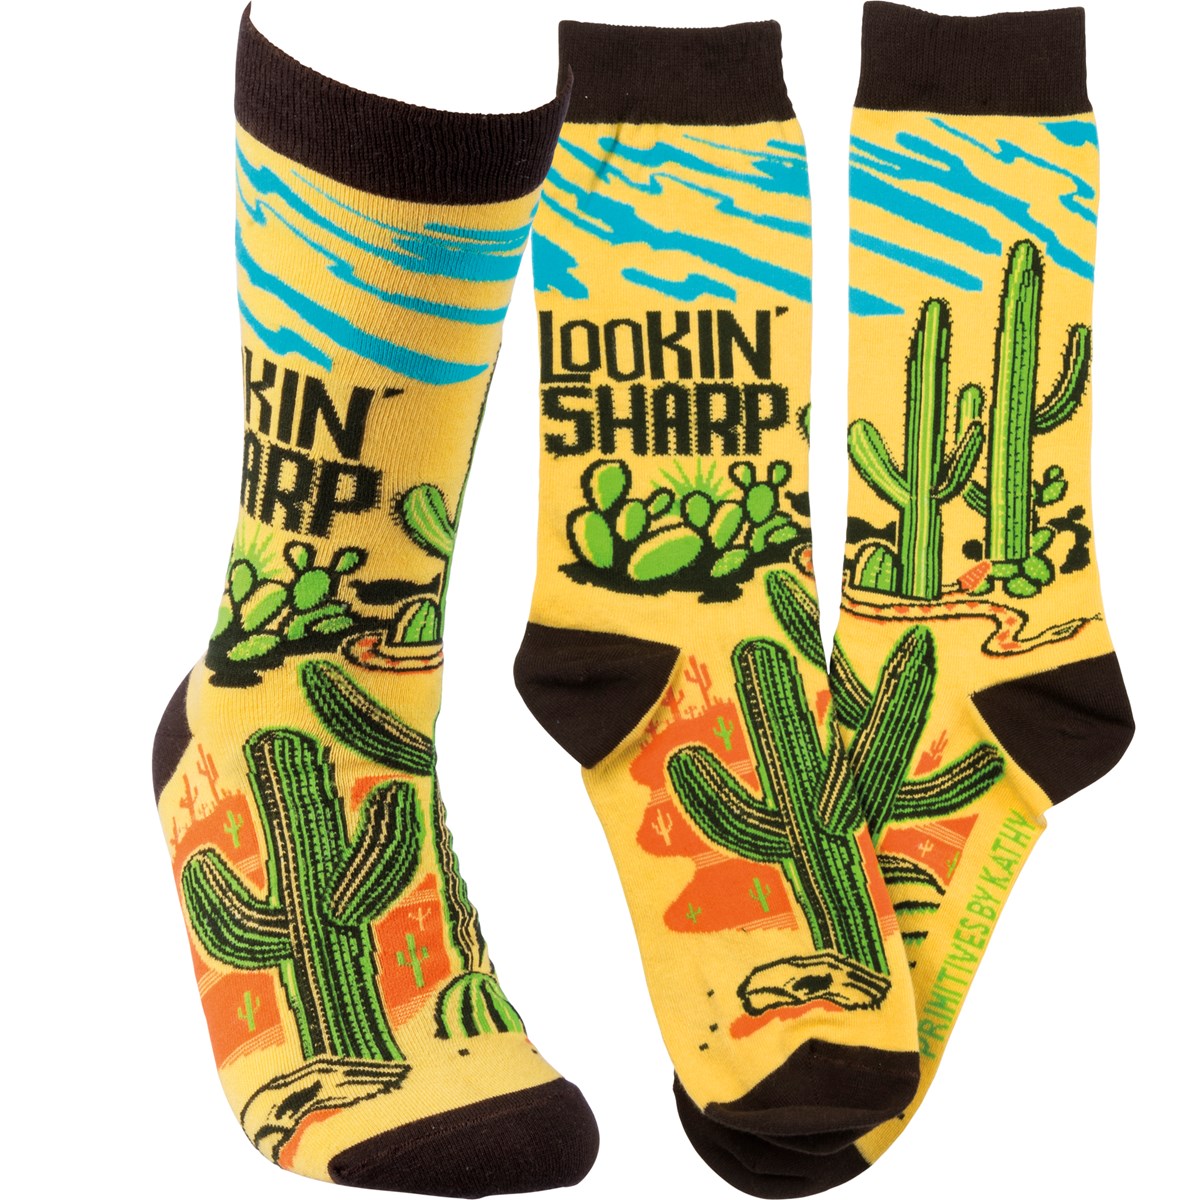 Socks | Lookin Sharp